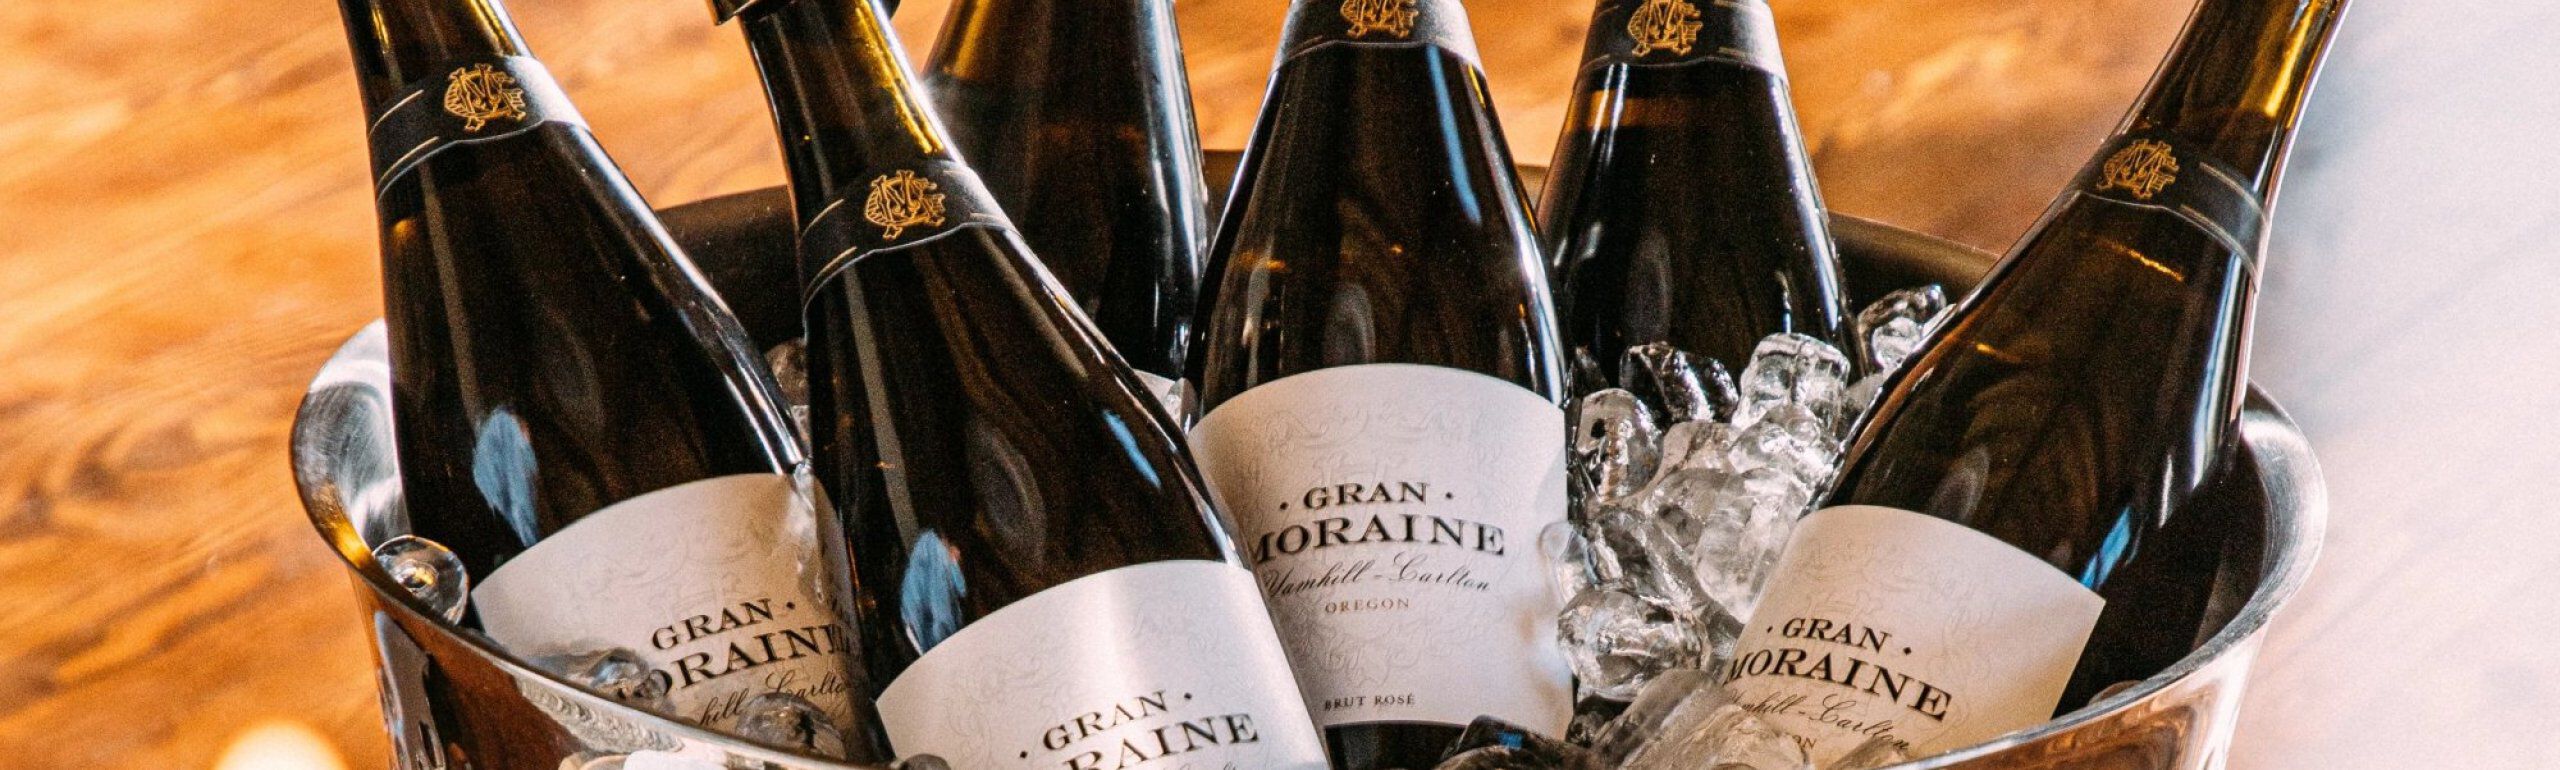 Bottles of Gran Moraine Sparkling Wine in wine bucket